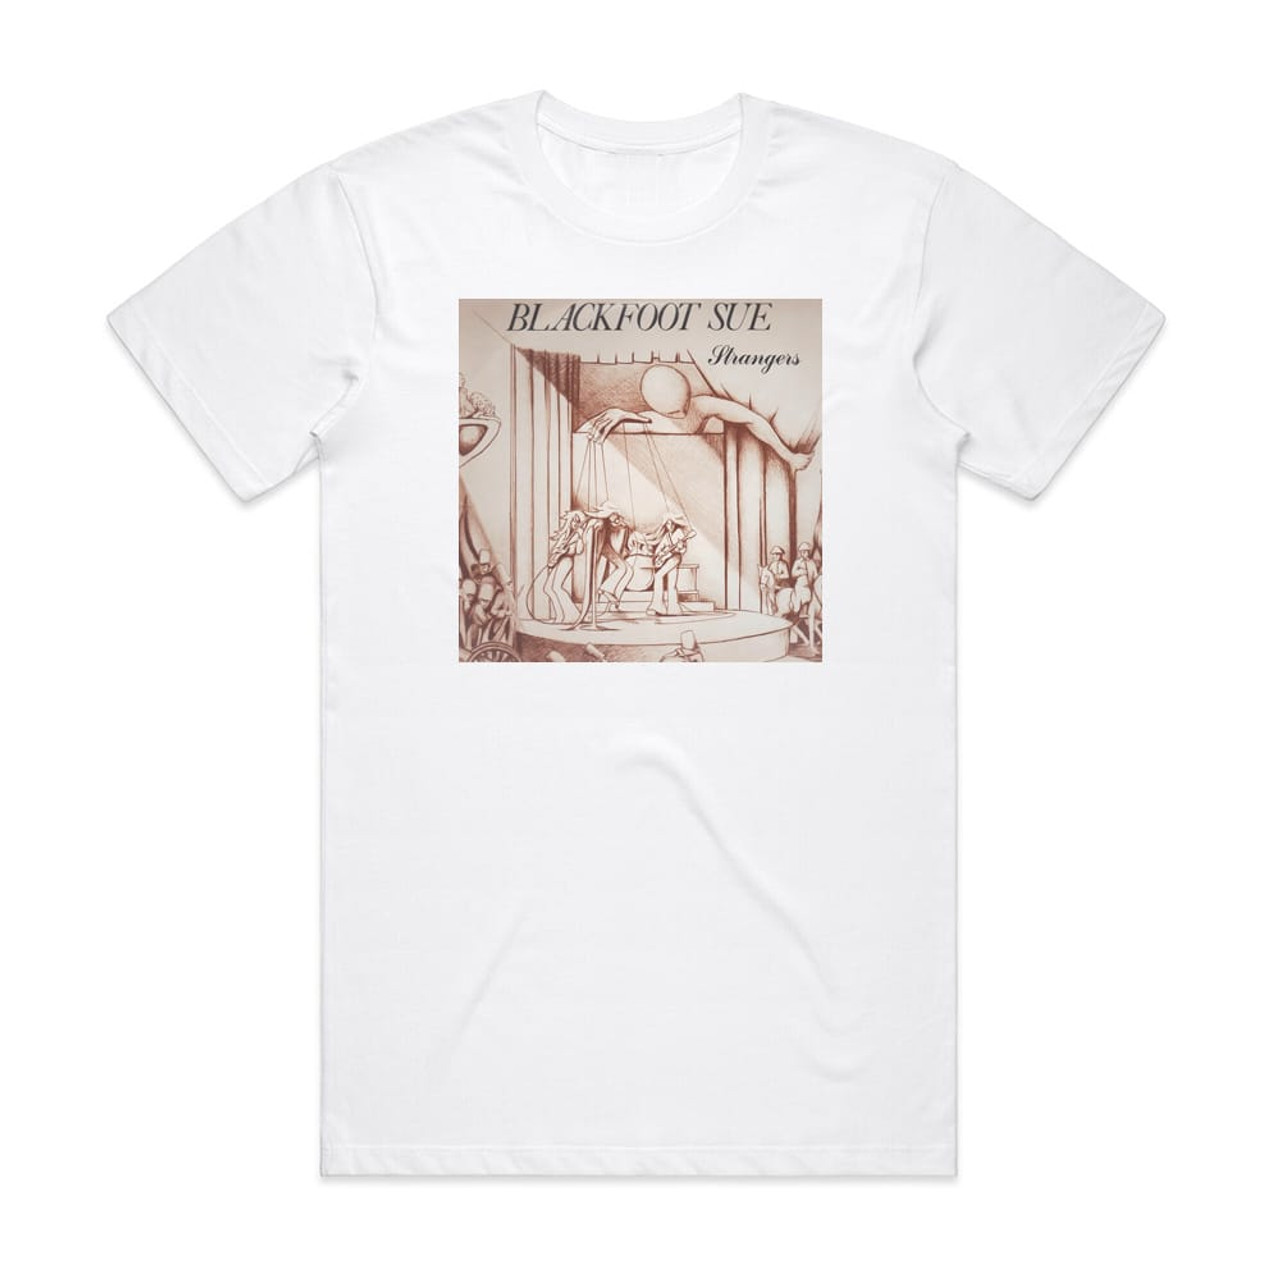 Blackfoot Sue Strangers Album Cover T-Shirt White